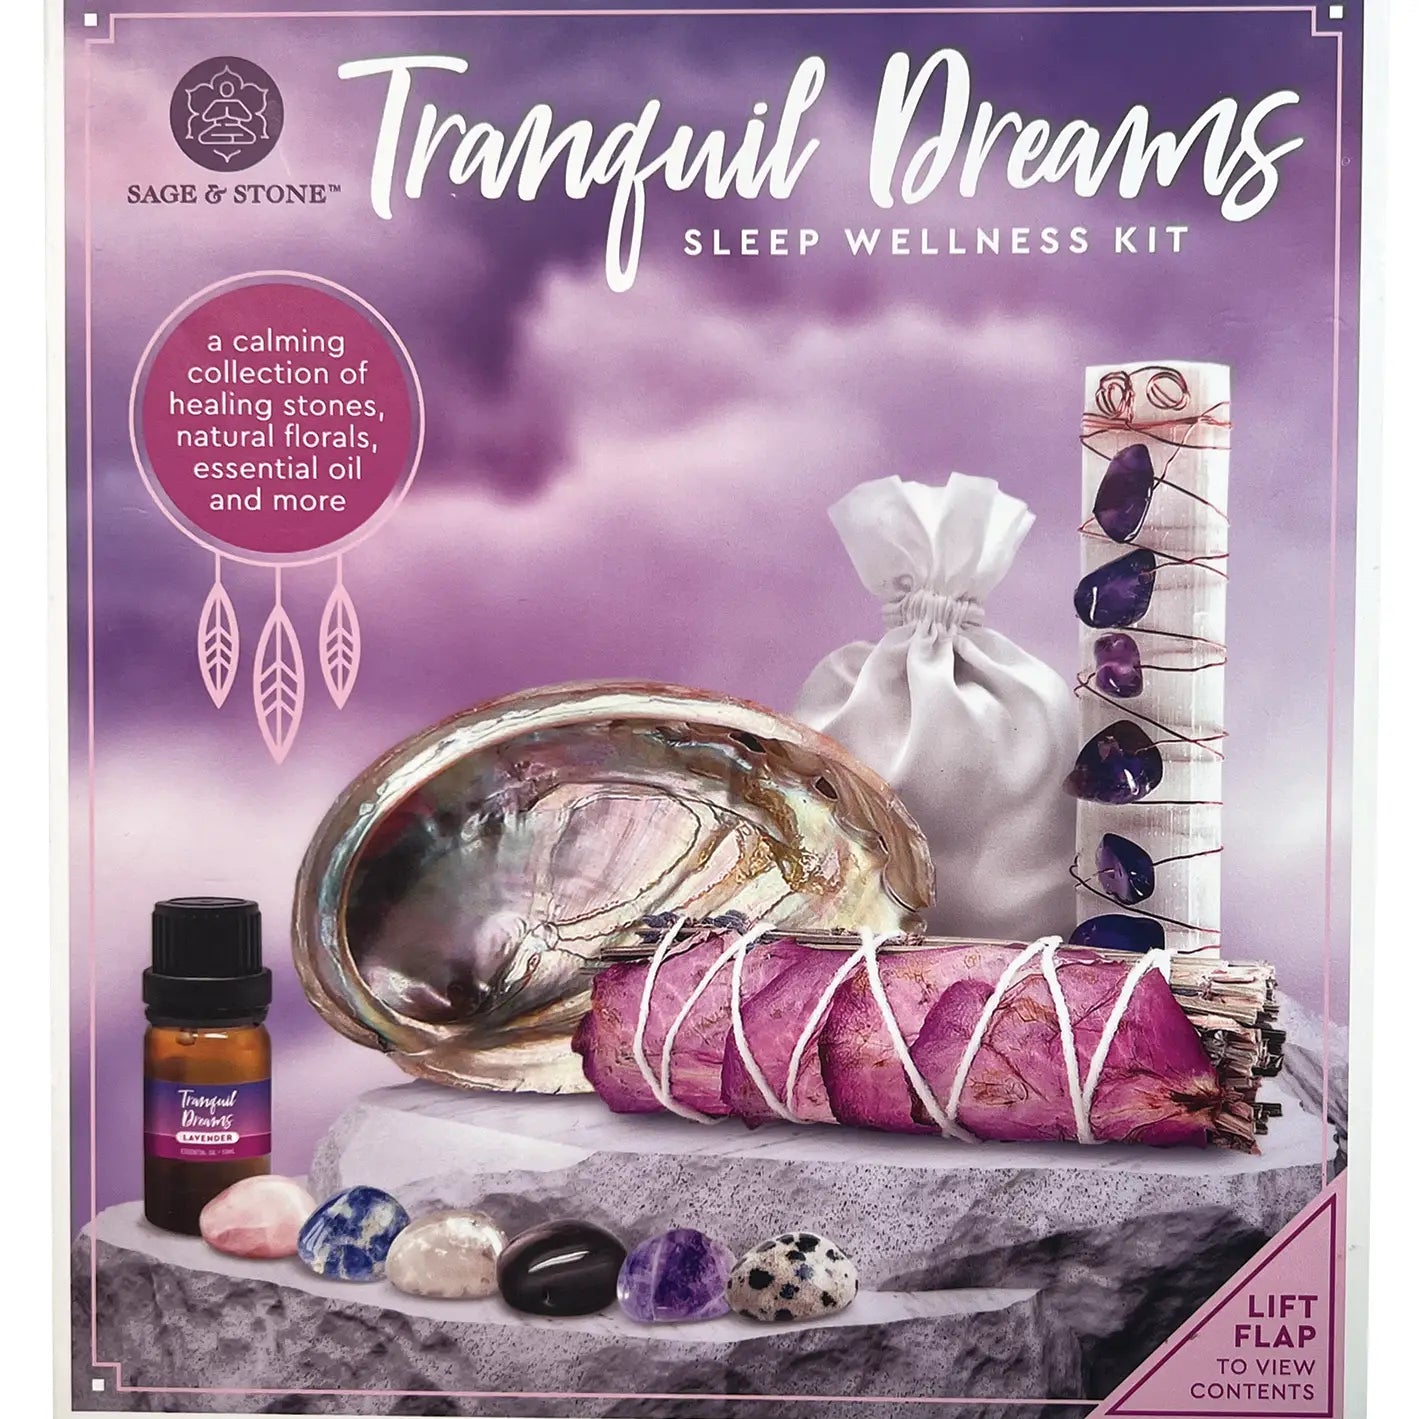 Tranquil Dreams Sleep Wellness Kit